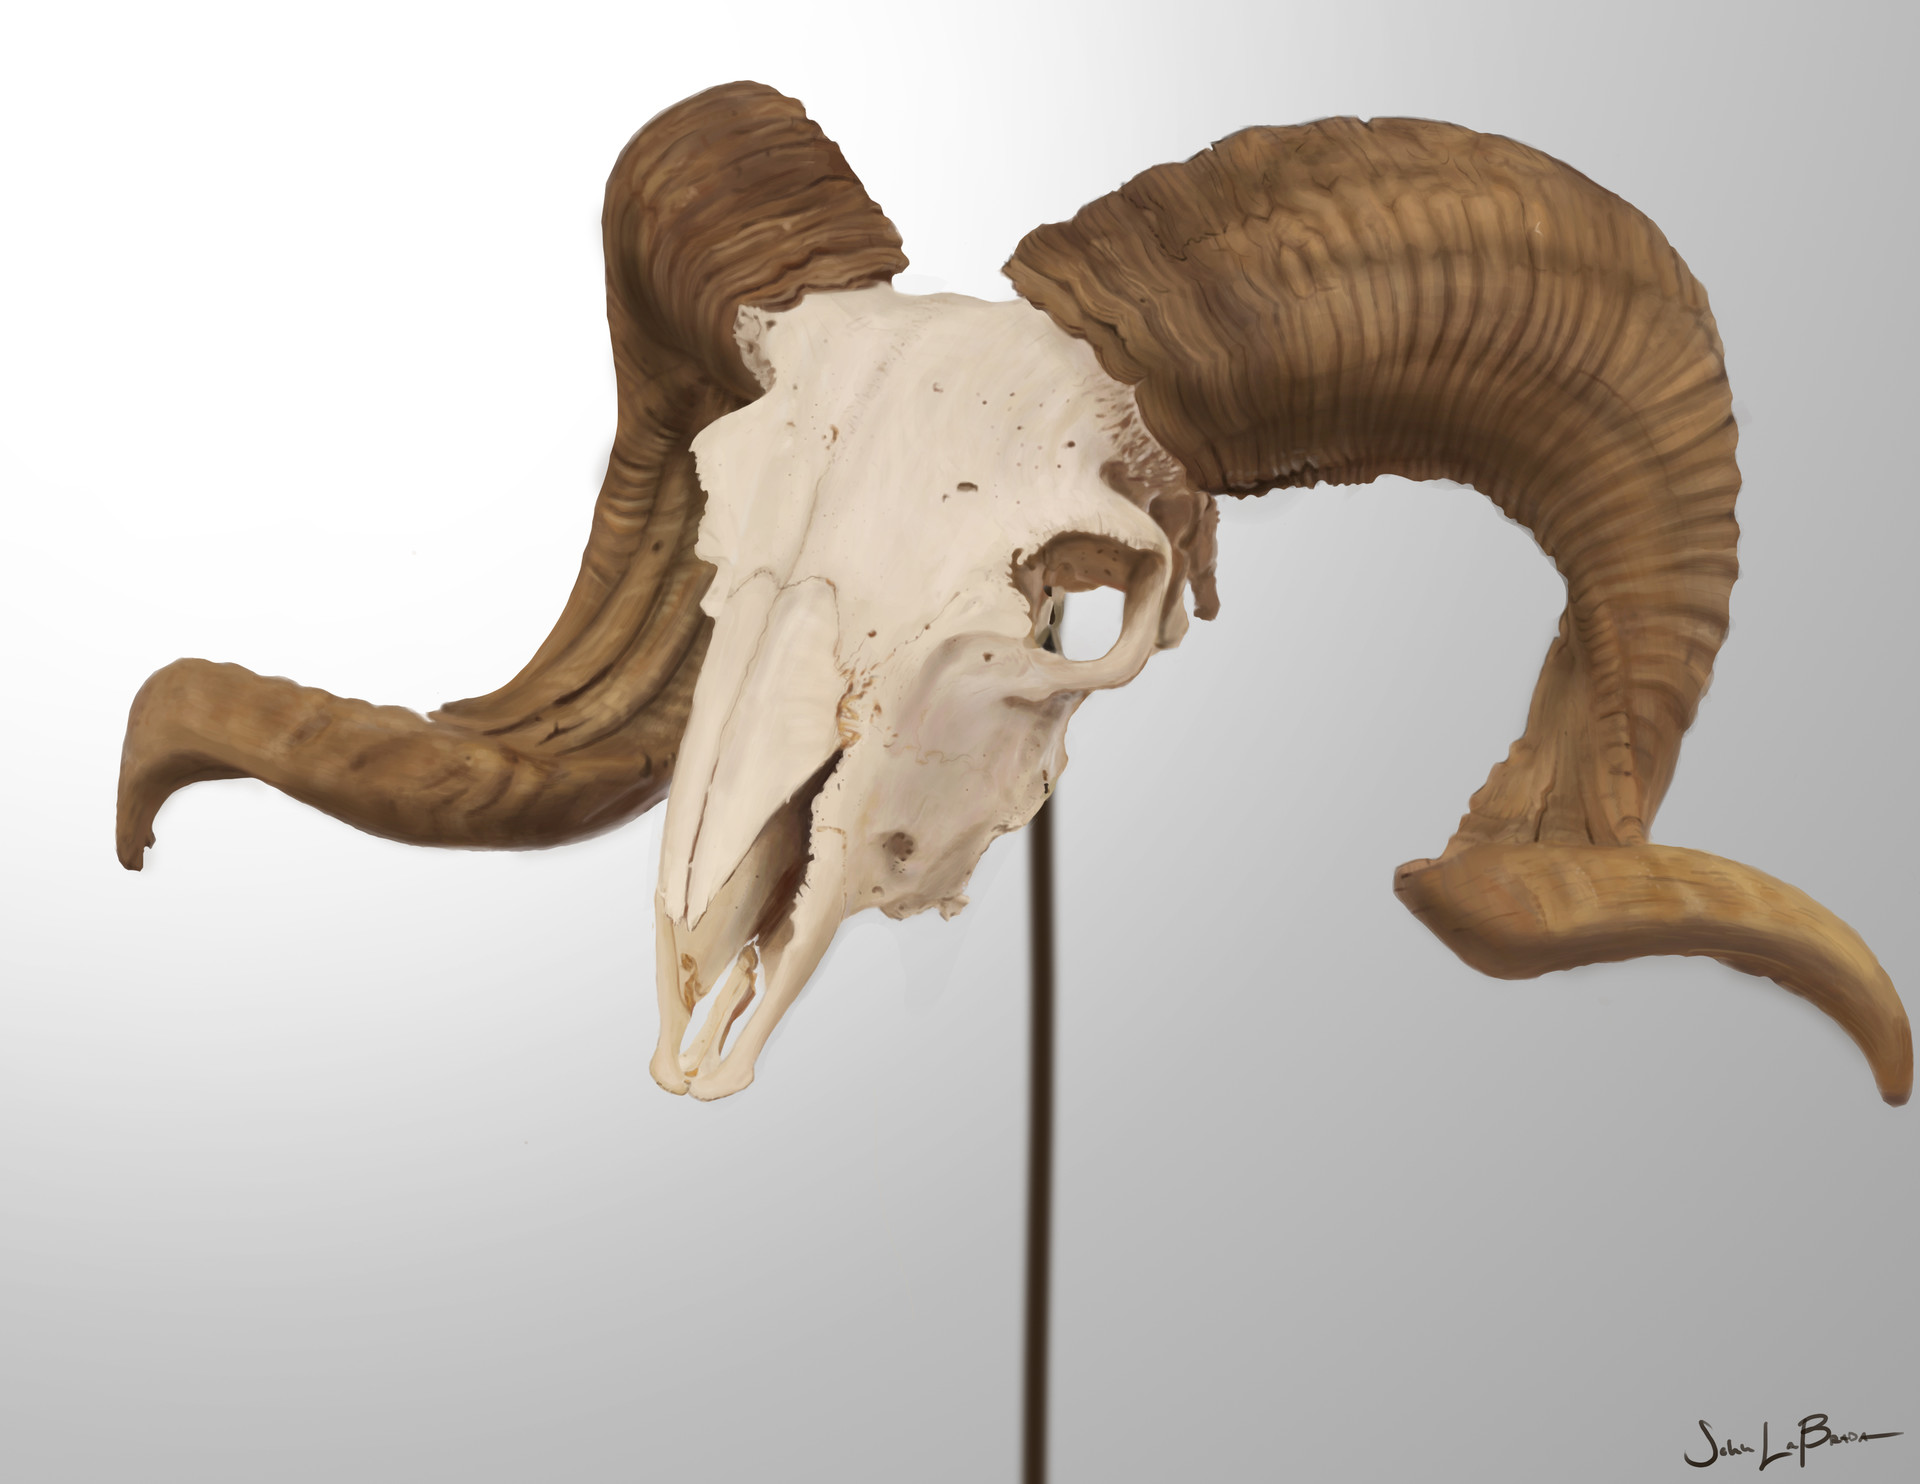 ArtStation - Photoshop Digital Painting - Ram Skull, John LaBrada